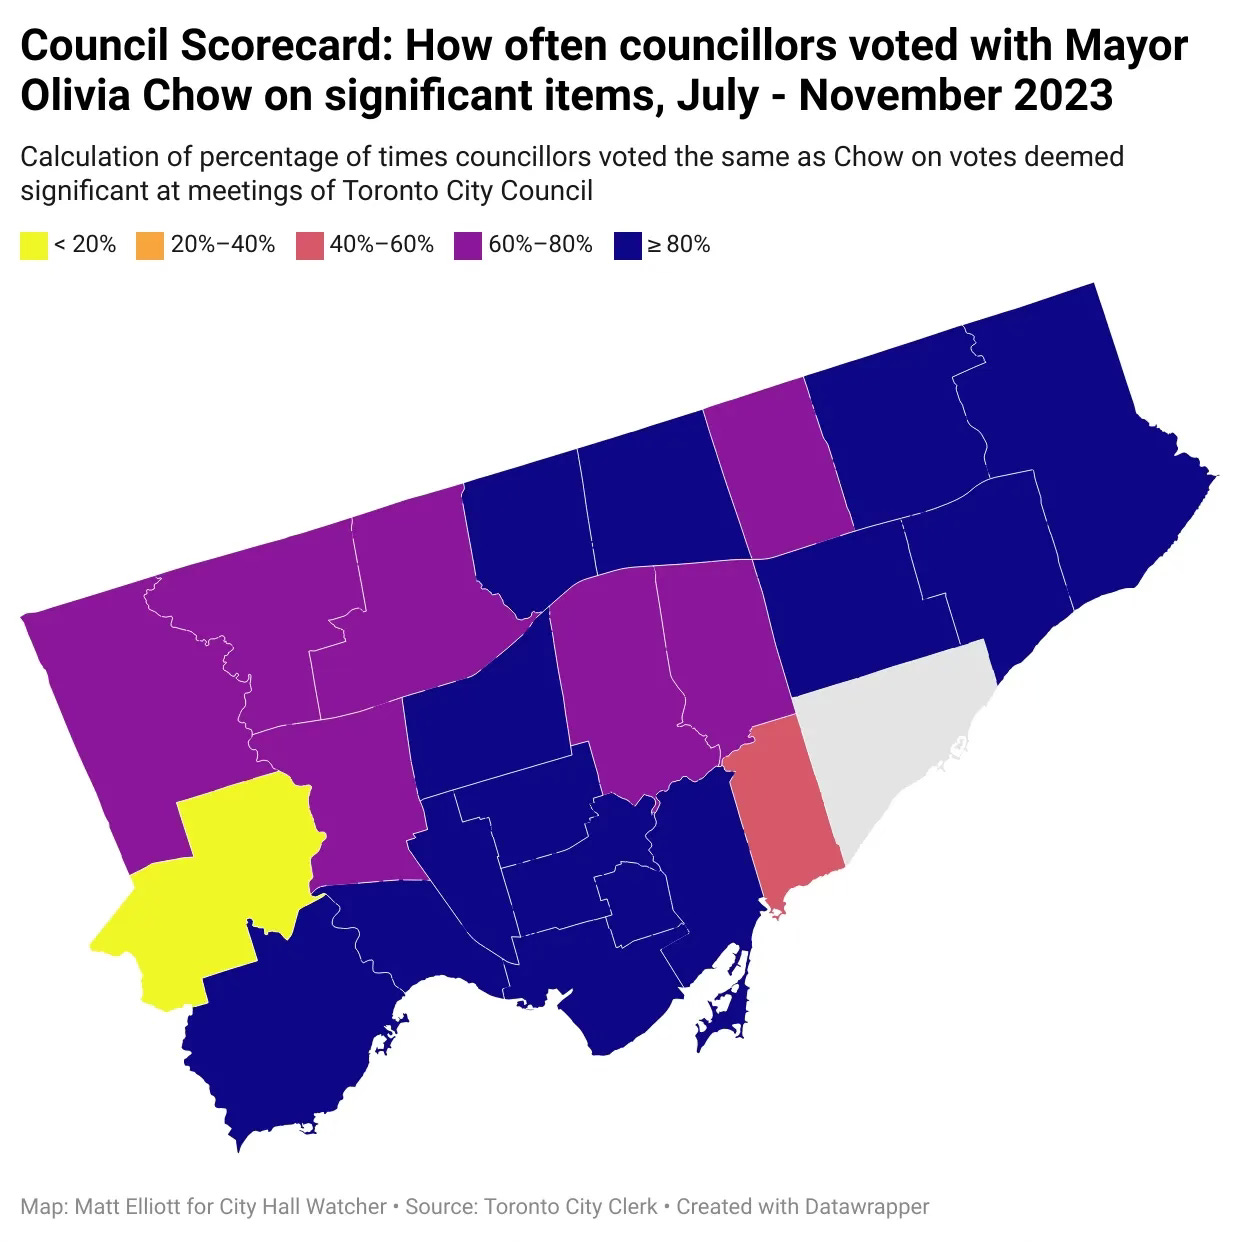 Map showing new Council Scorecard data at ward level